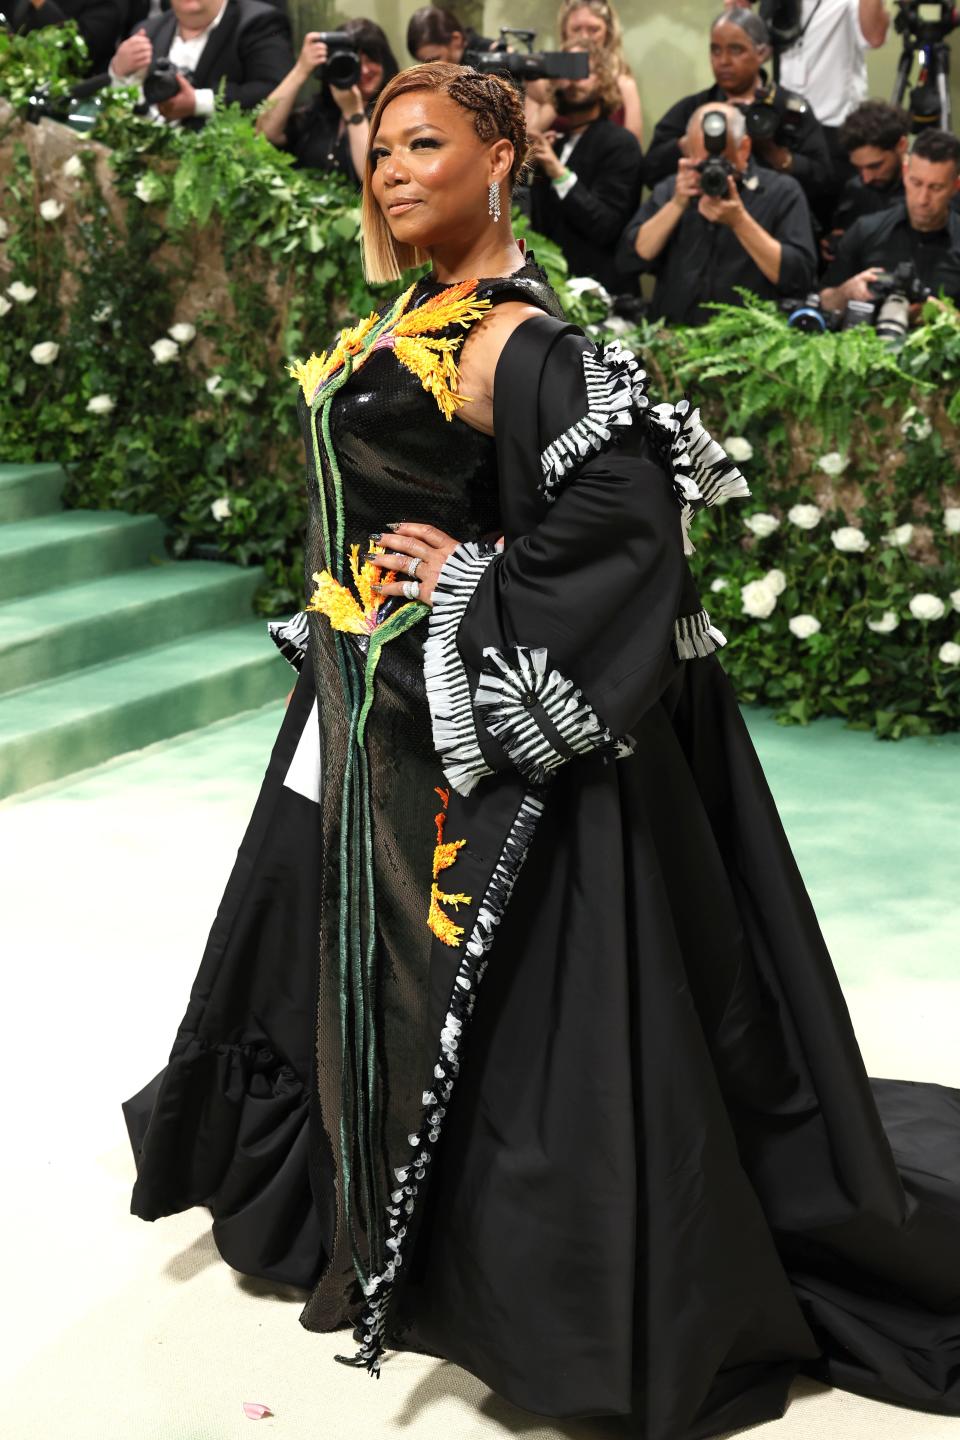 Queen Latifah attends her first Met Gala in custom Thom Browne (Getty Images)